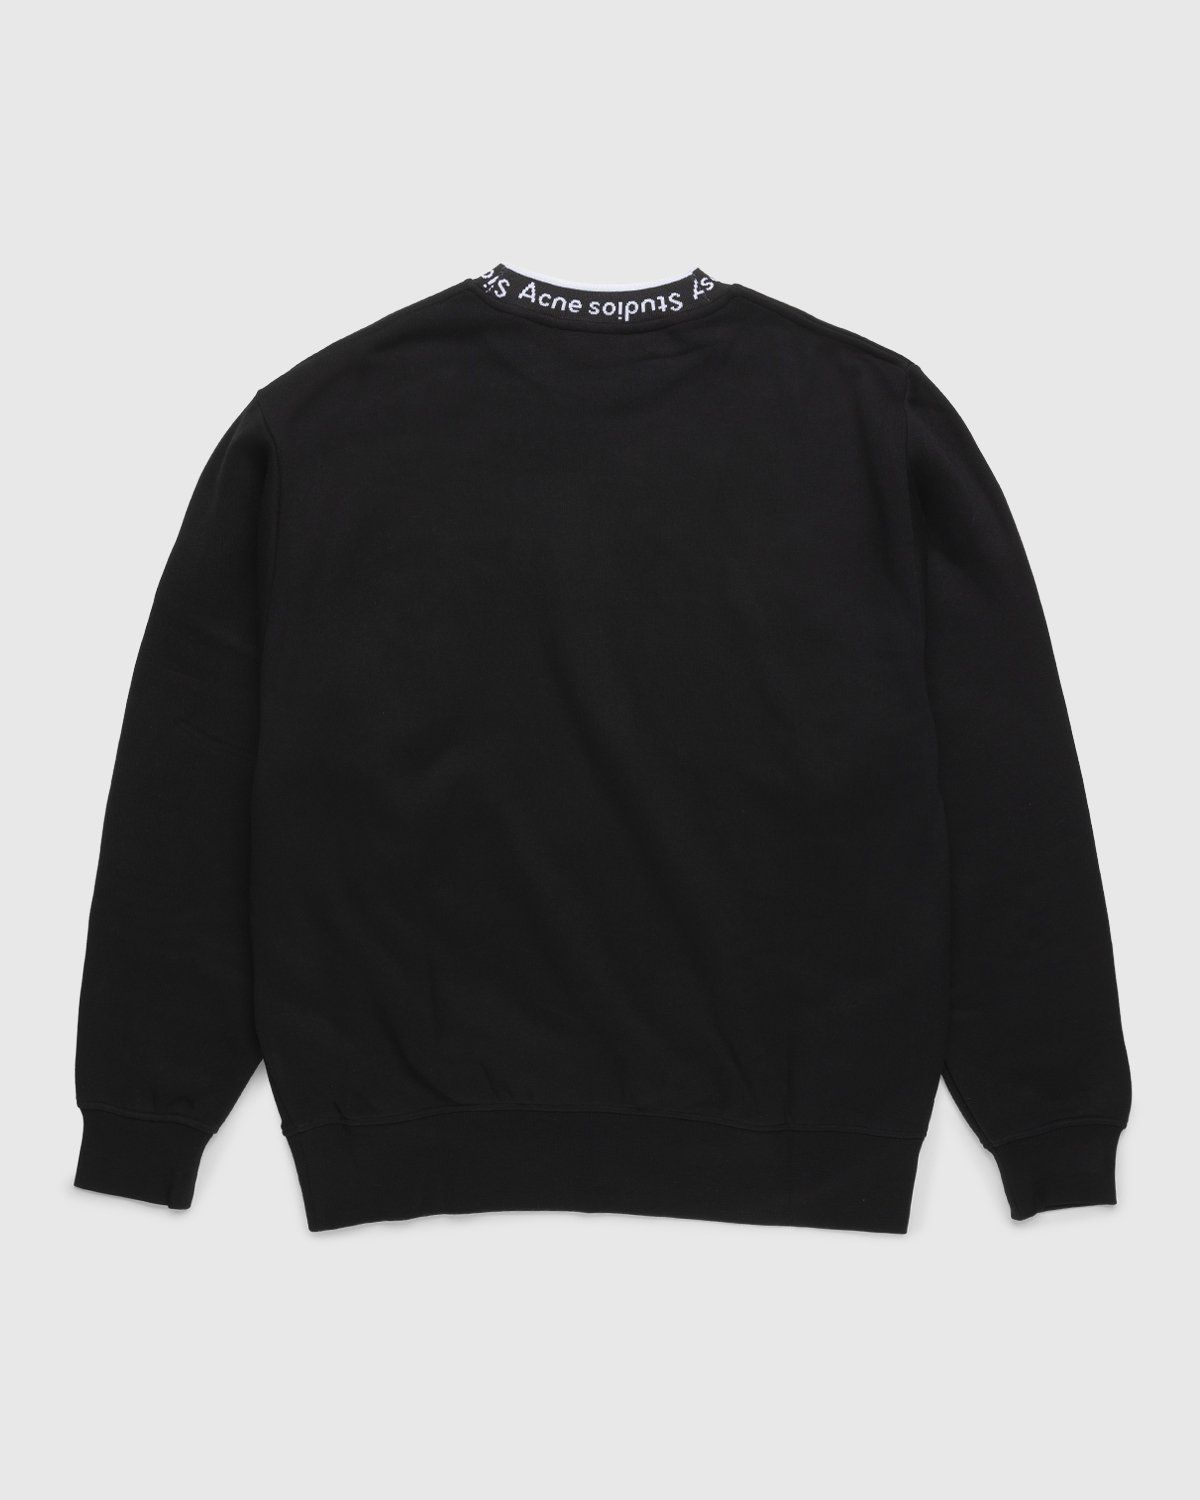 Acne Studios – Logo Rib Sweatshirt Black - Sweatshirts - Black - Image 2